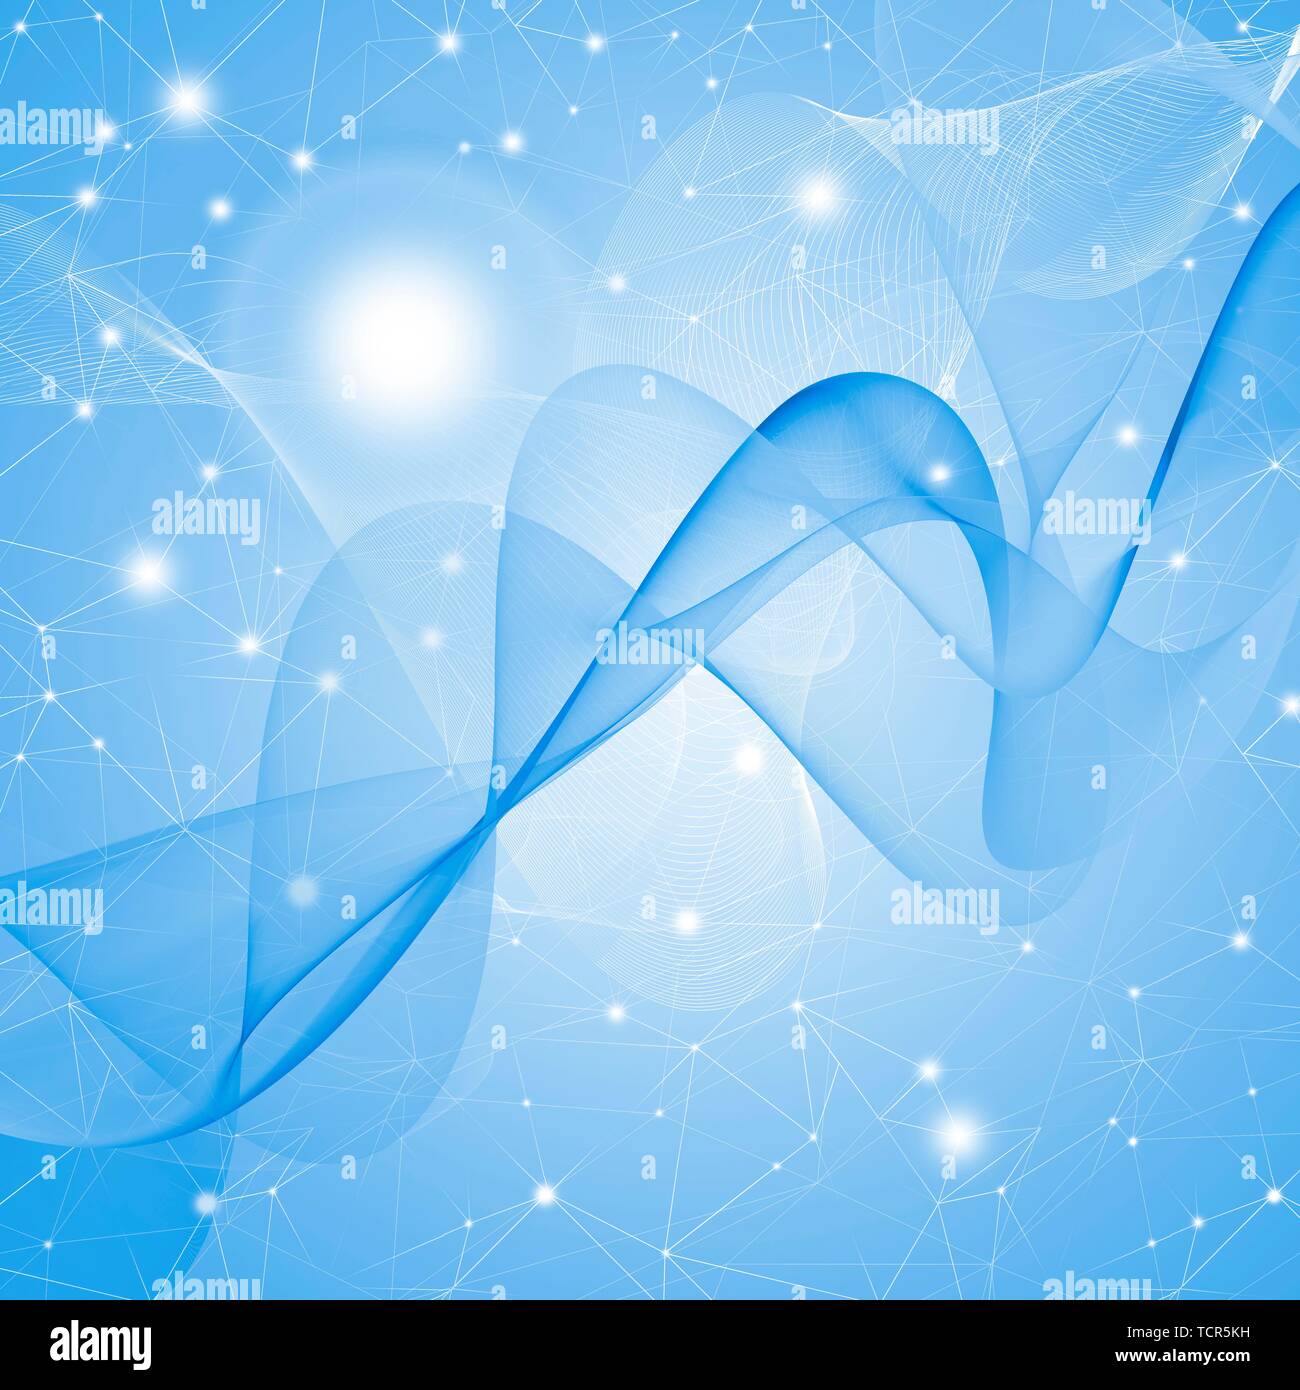 Blue swirls, illustration Stock Photo